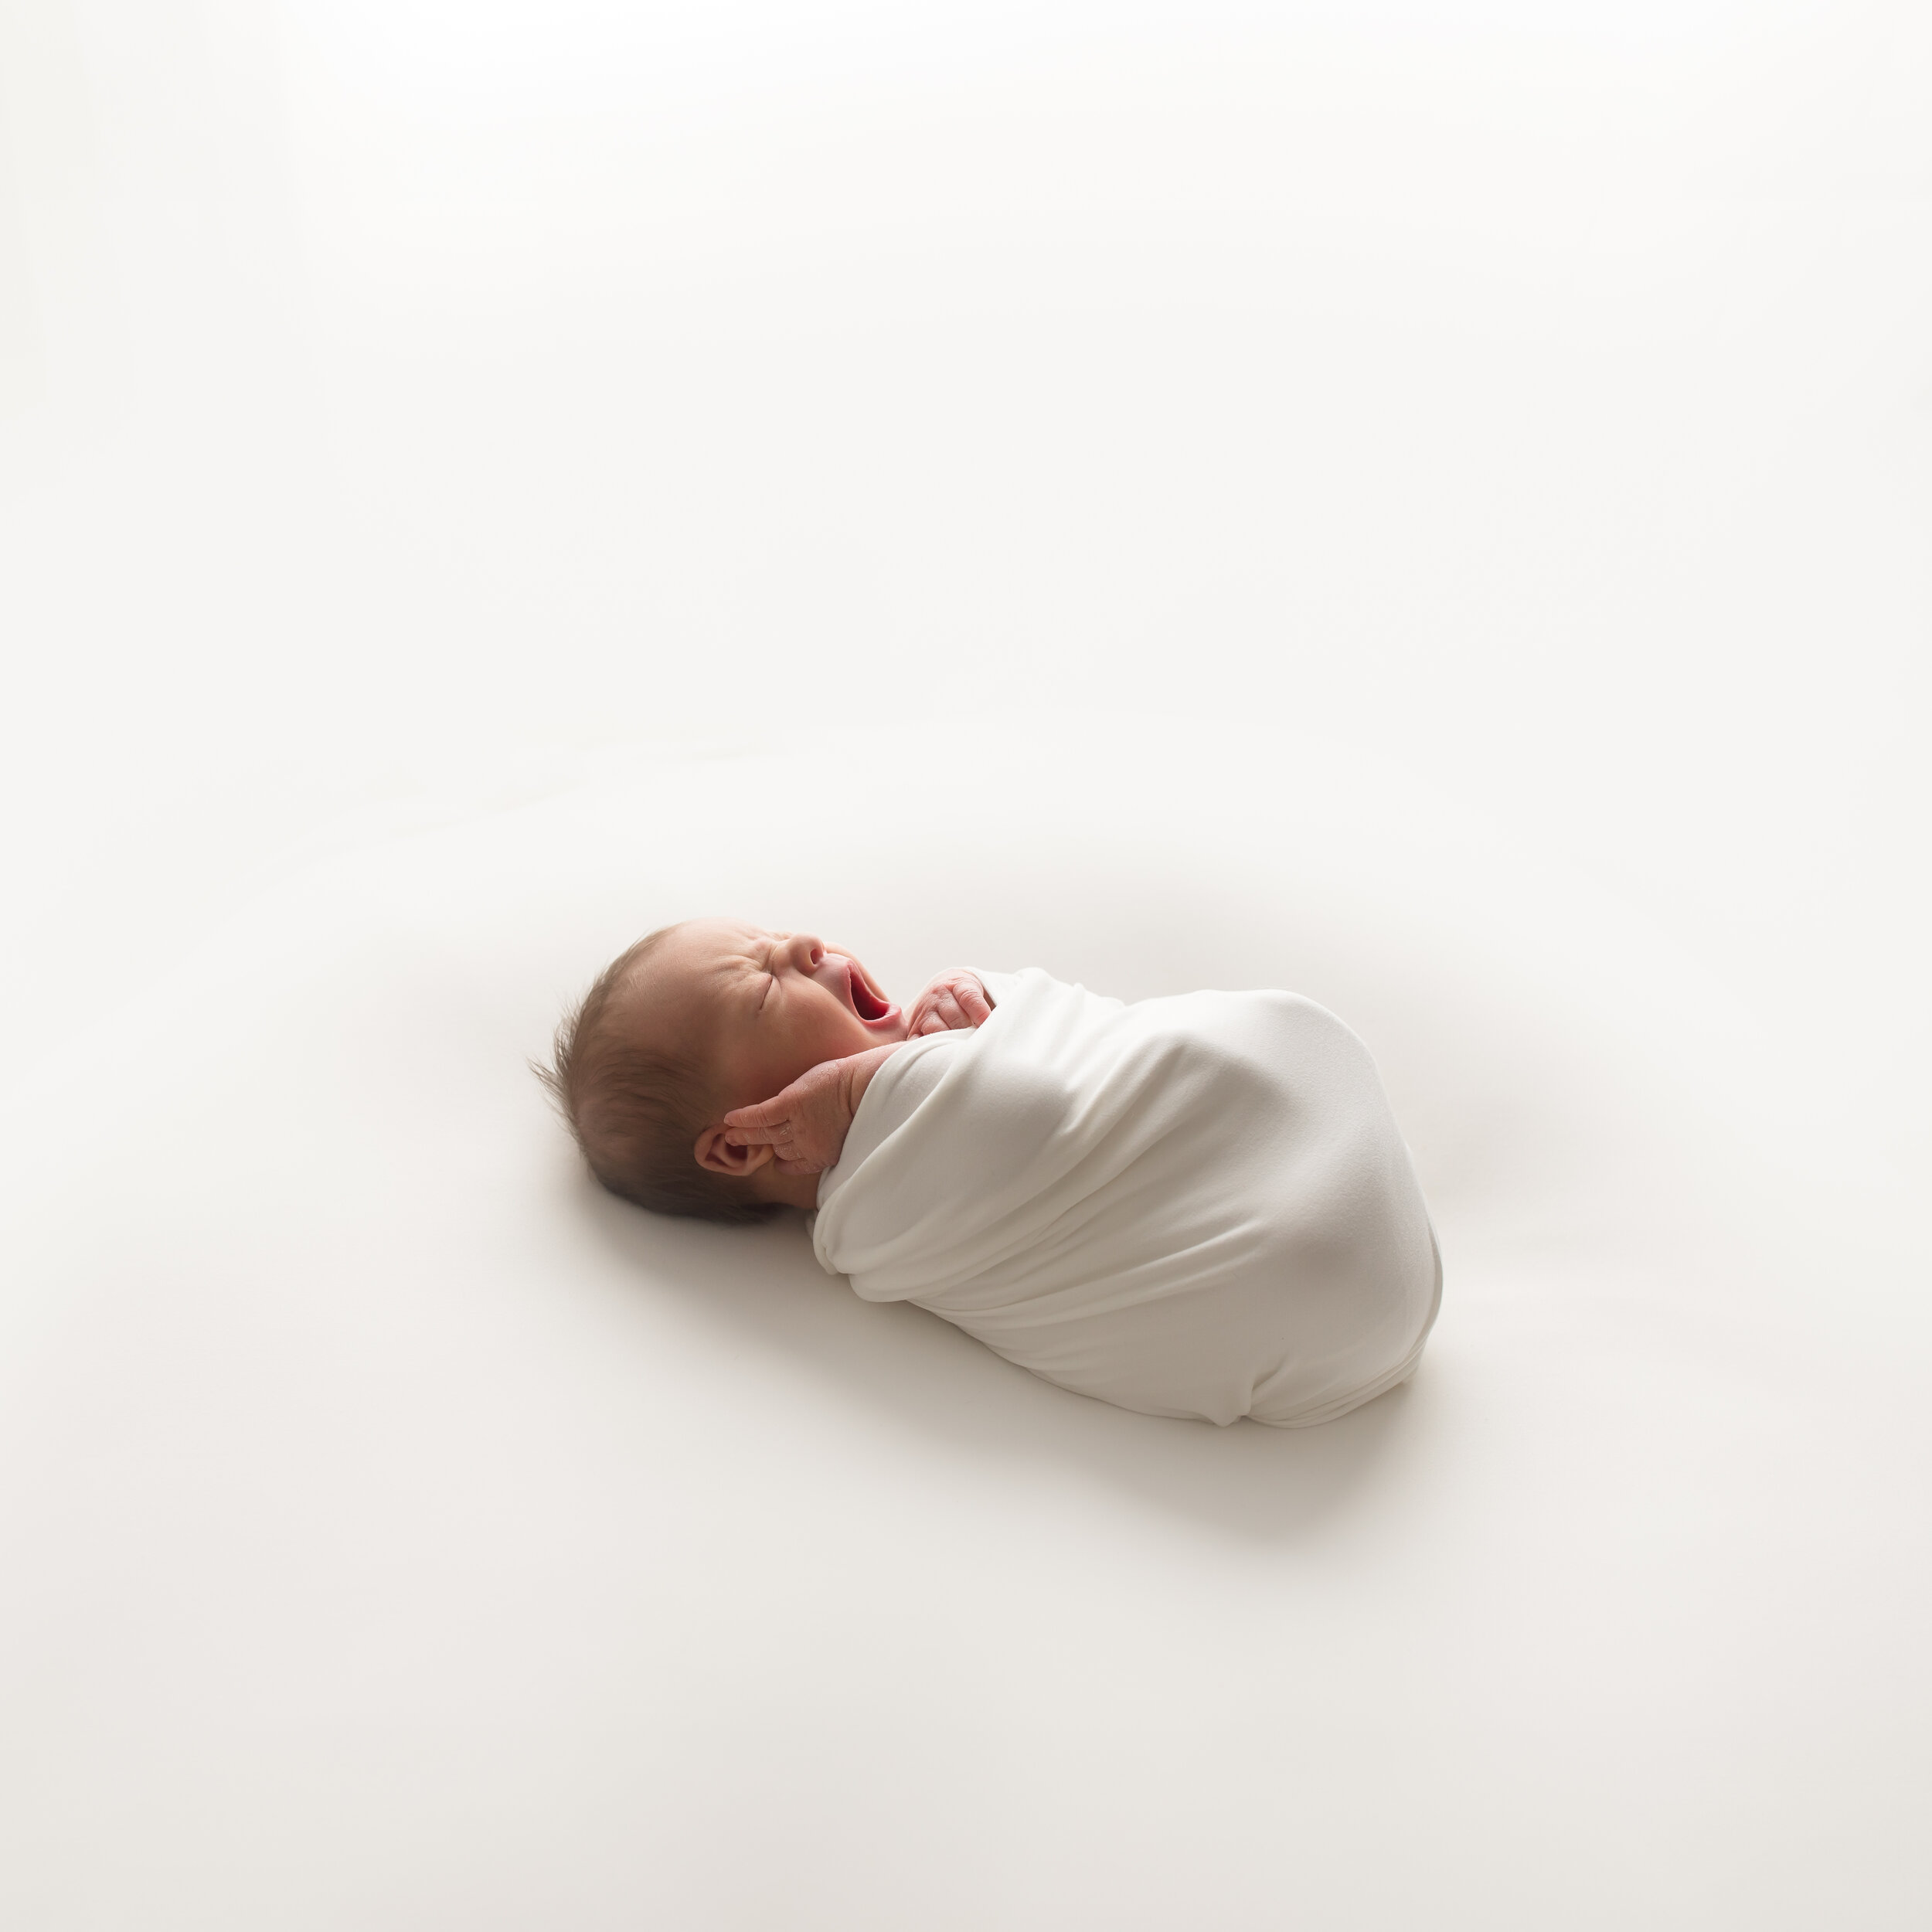 LOCAL-newborn-PHOTOGRAPHER-DARTMOUTH-101-2.jpg